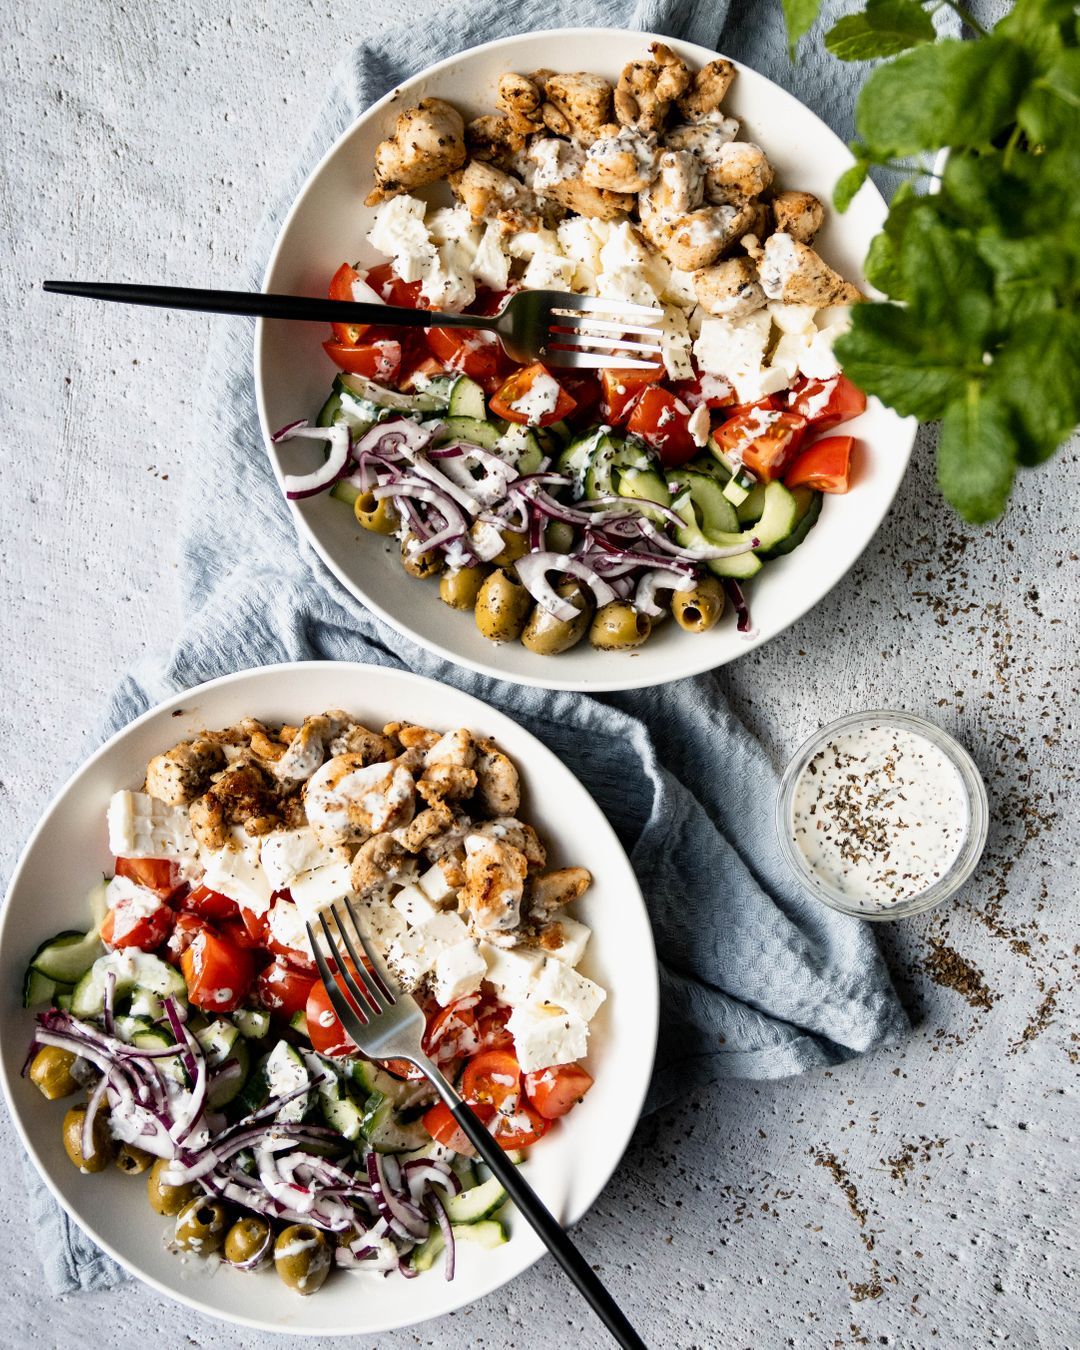 Seasoned Greek salad with chicken breast